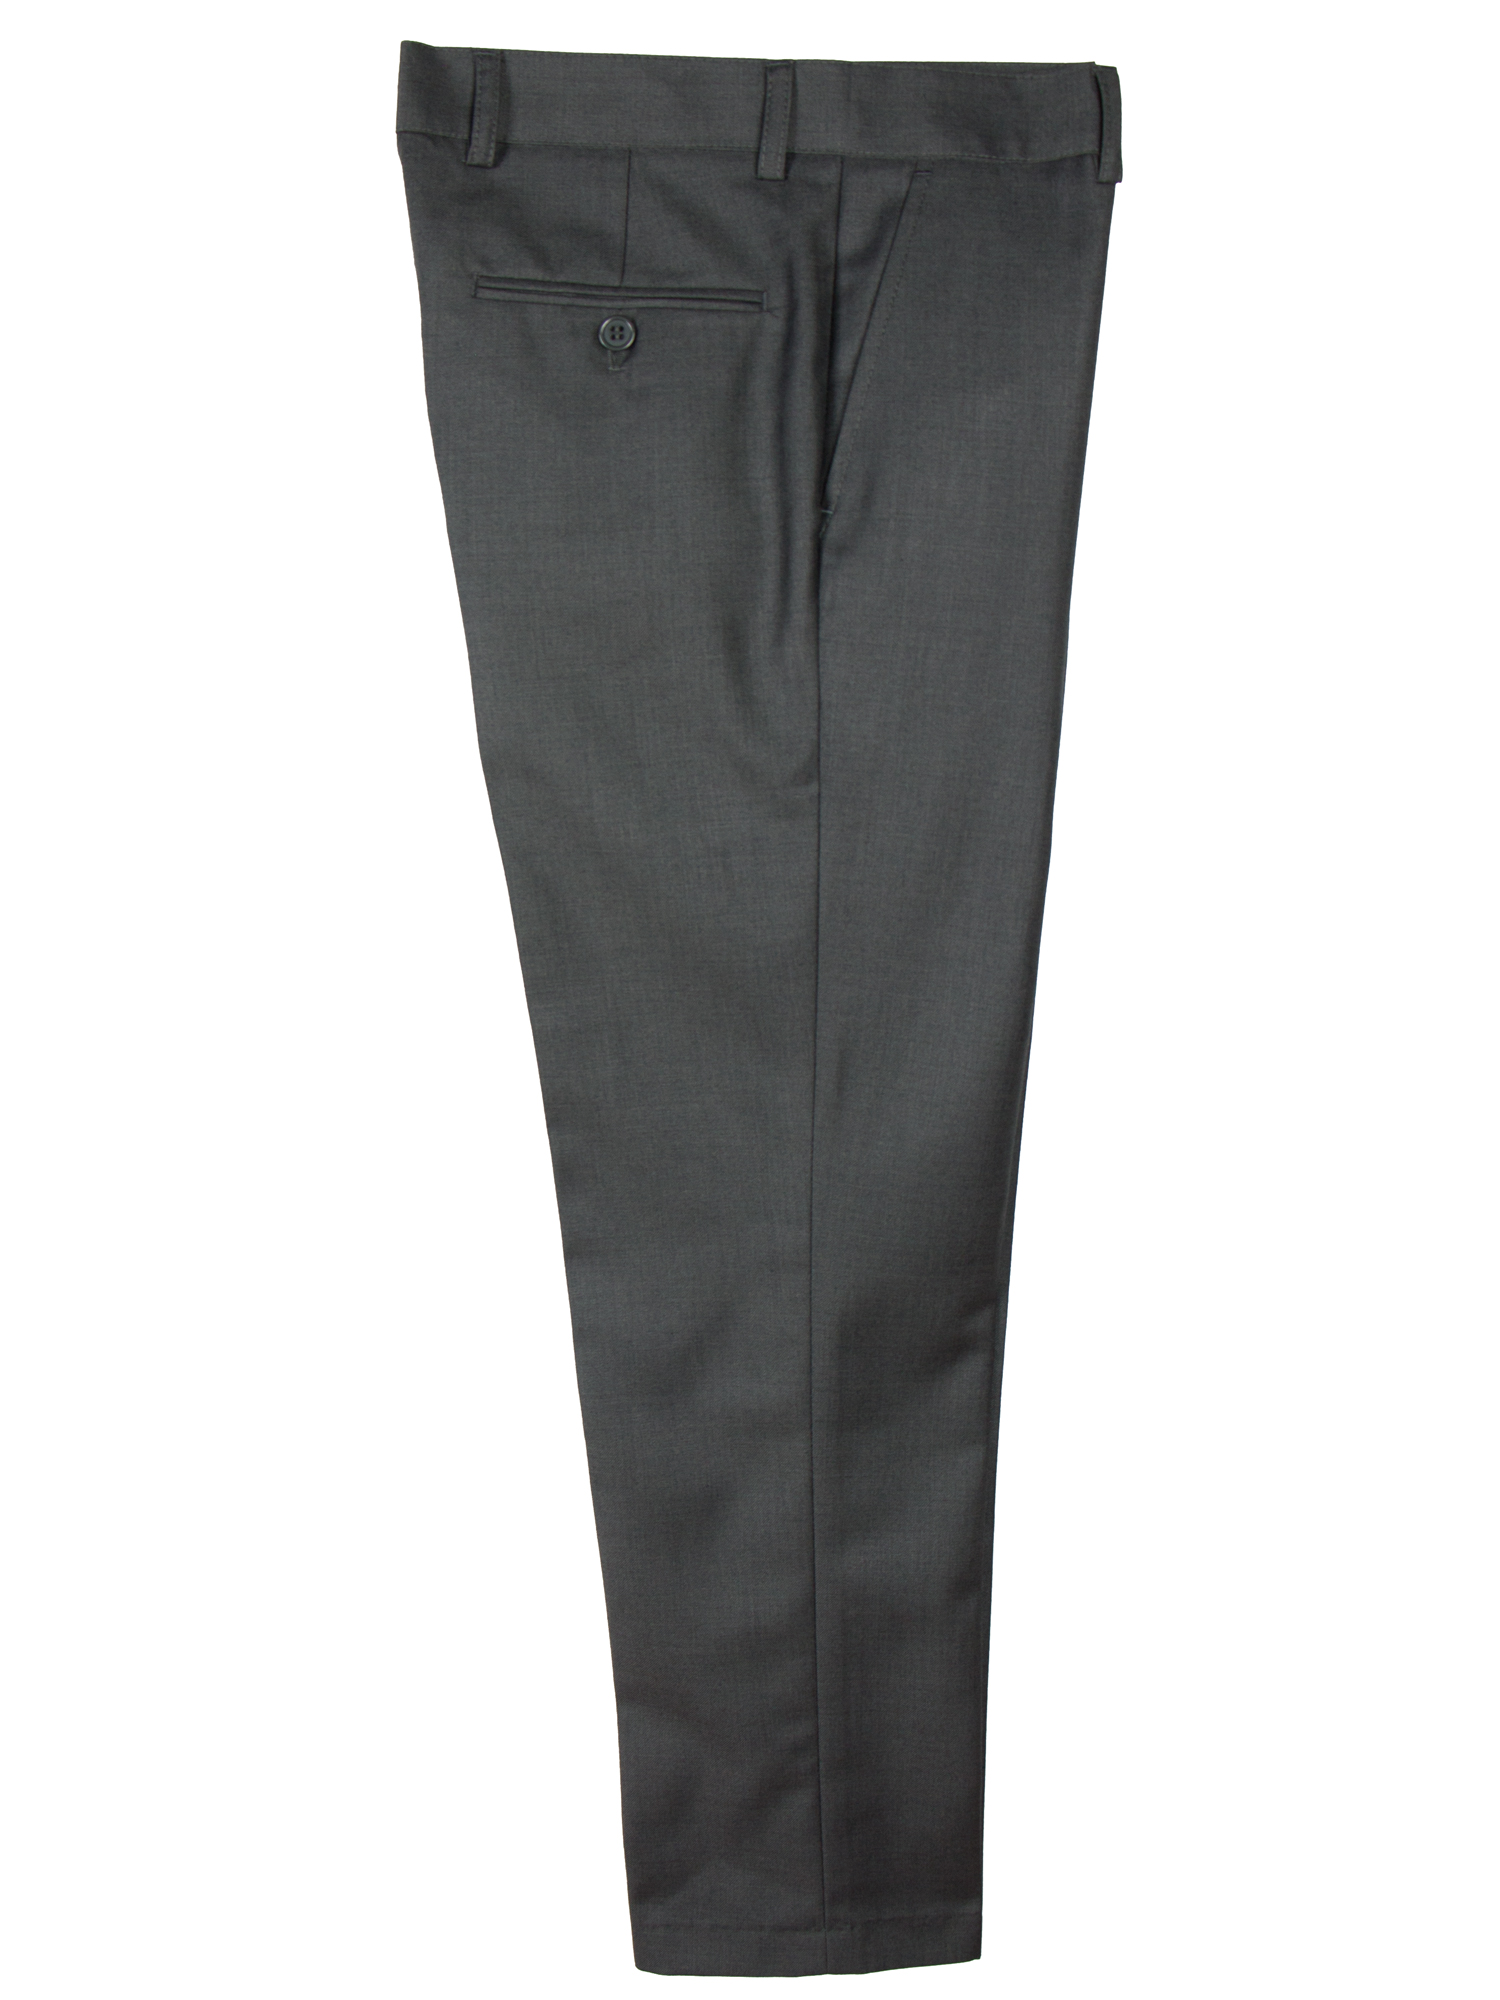 Spring Notion Boys' Flat Front Dress Pants Charcoal - Walmart.com